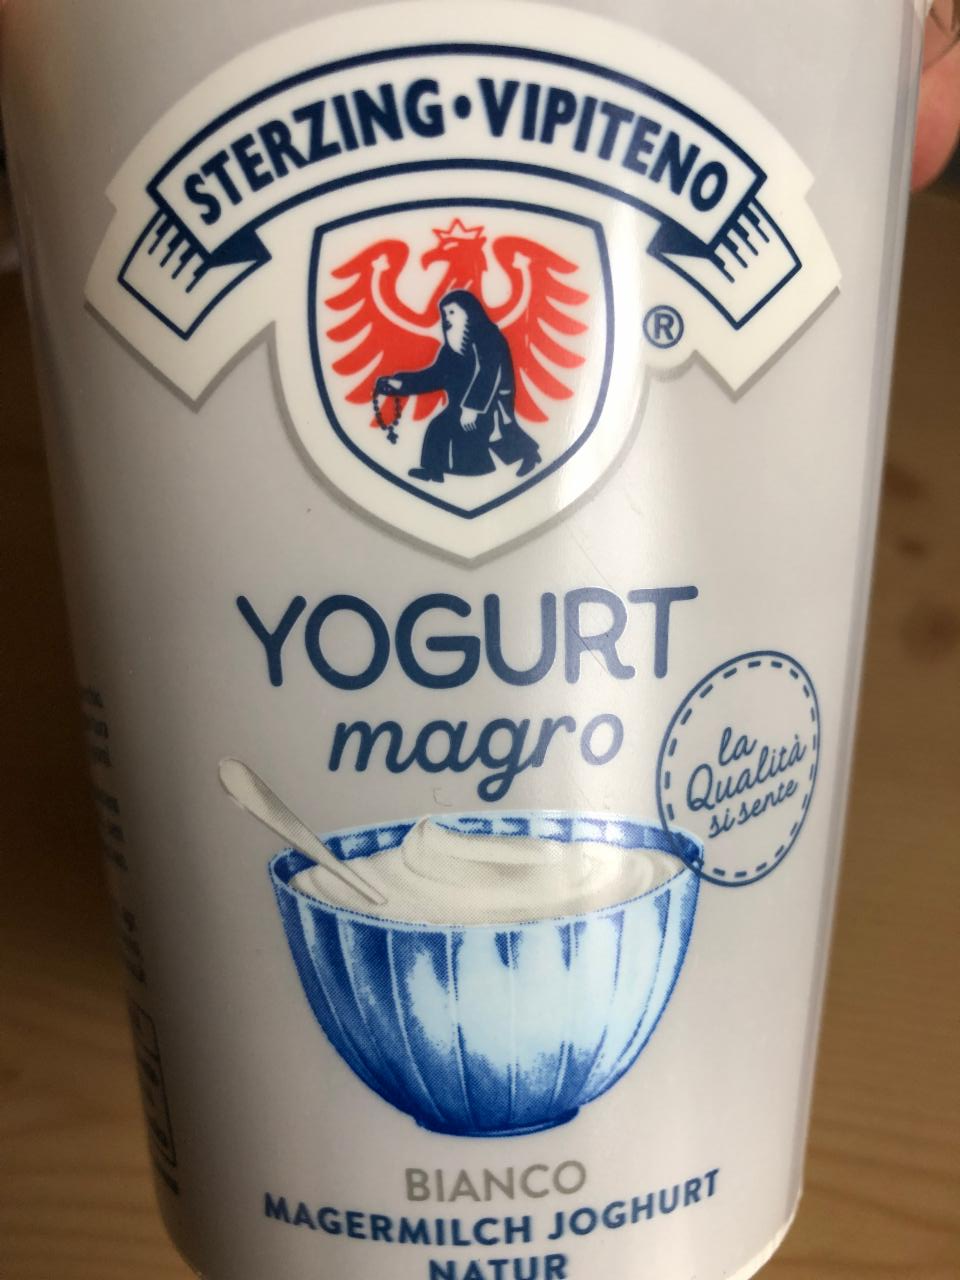 Fotografie - Yogurt magro Bianco Sterzing Vipiteno